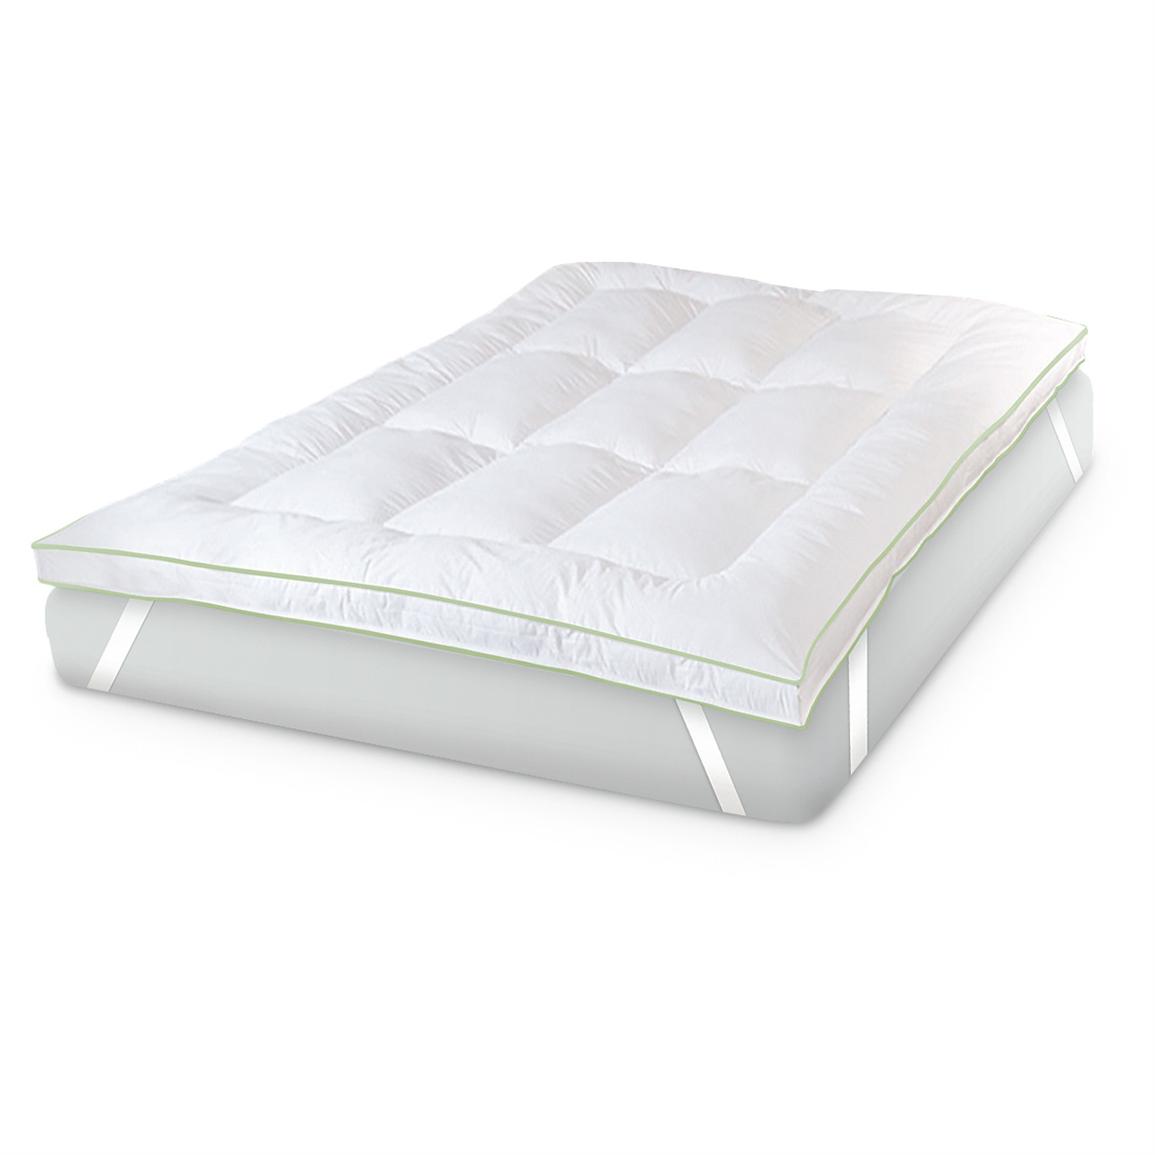 ... foam mattress topper save big bucks sensorpedic 3 memory foam mattress